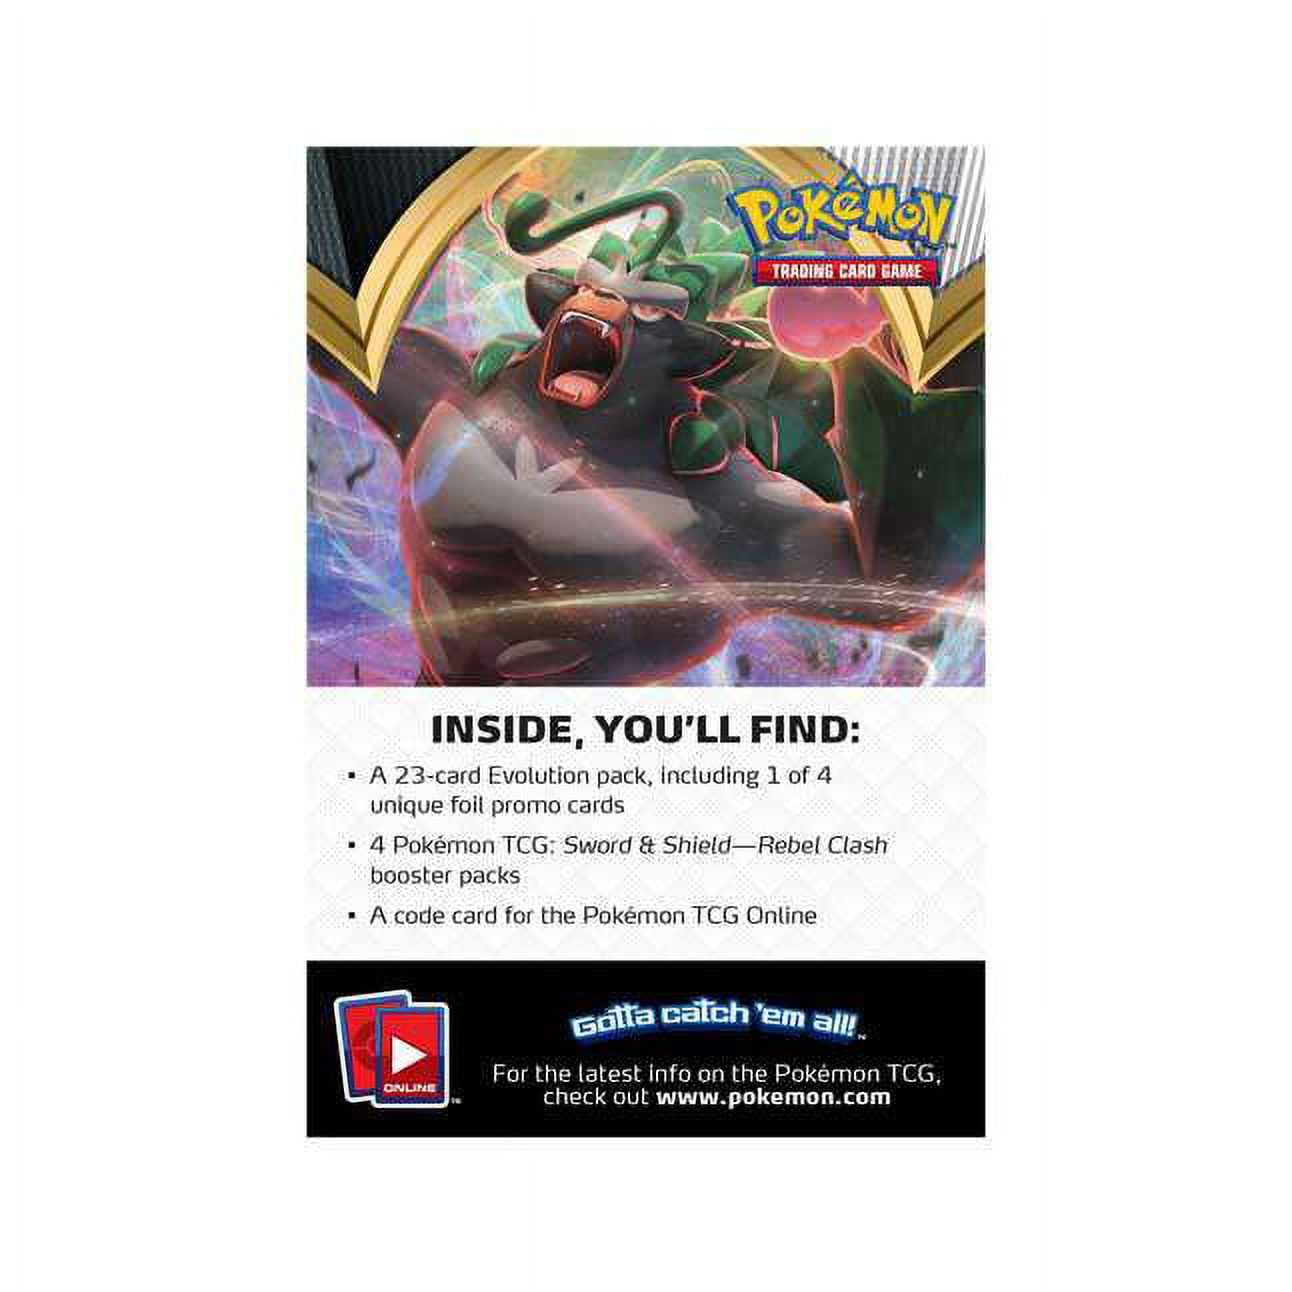 Pokemon Sword Shield Rebel Clash Vmax Ex Gx Booster Box Tcg ▻   ▻ Free Shipping ▻ Up to 70% OFF